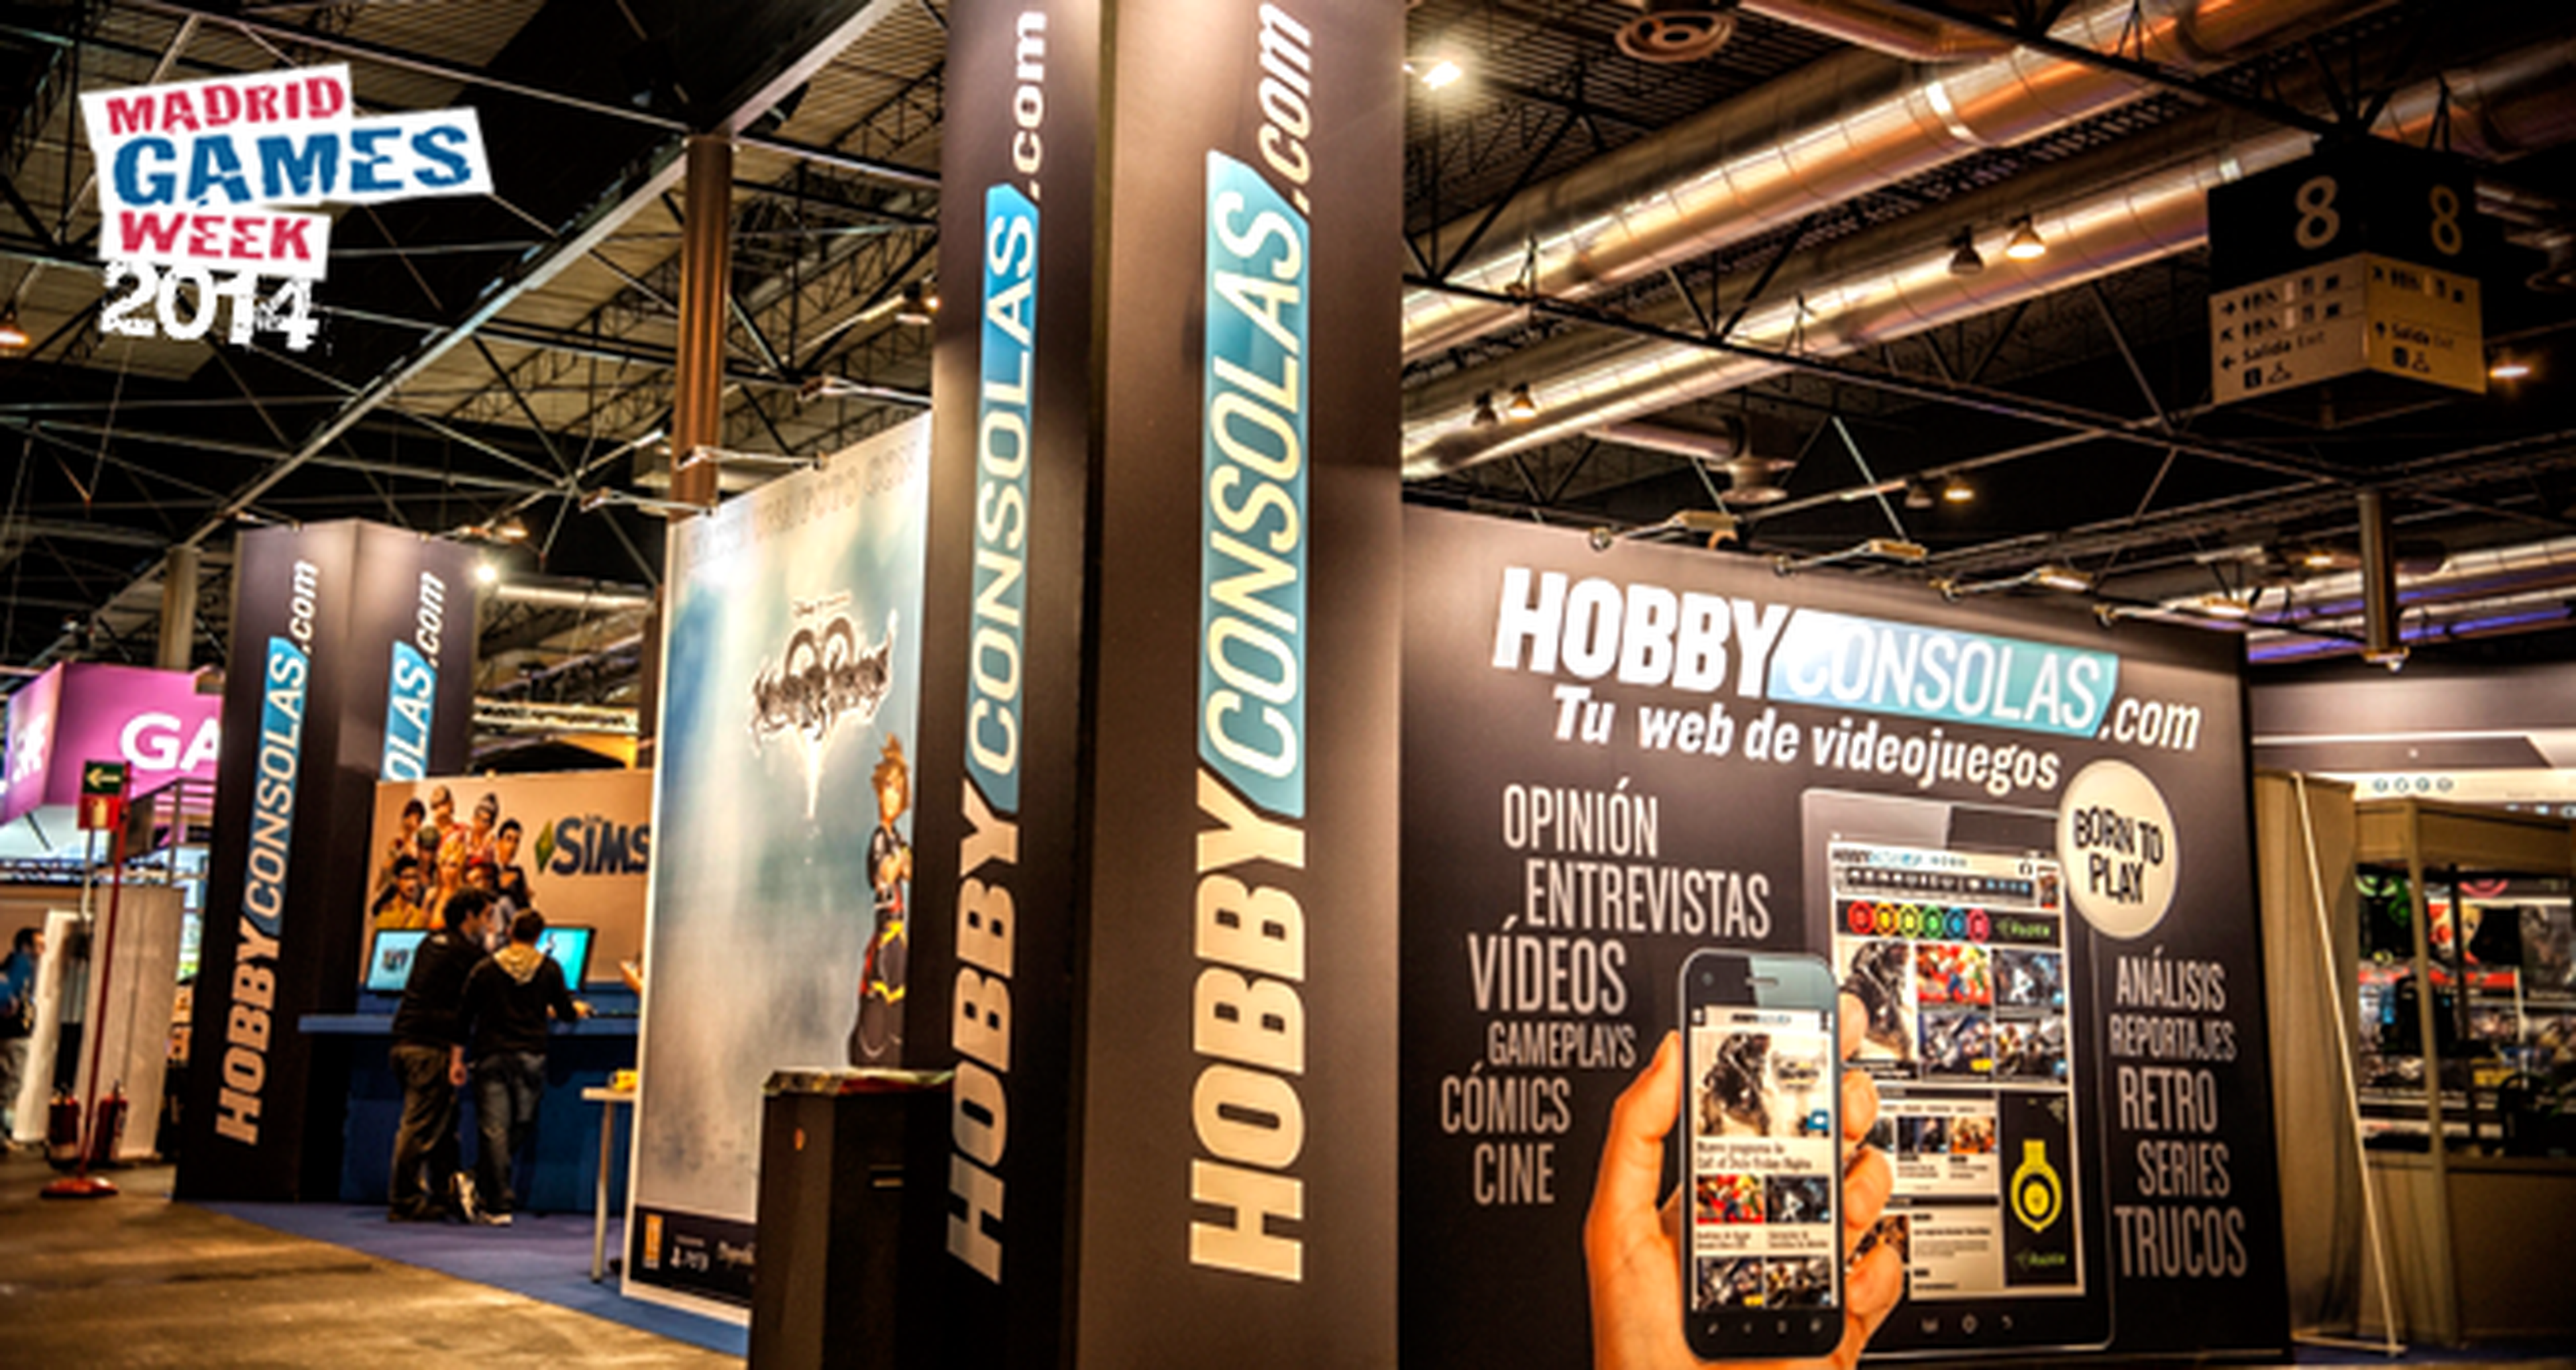 Madrid Games Week 2014: el stand de Hobby Consolas